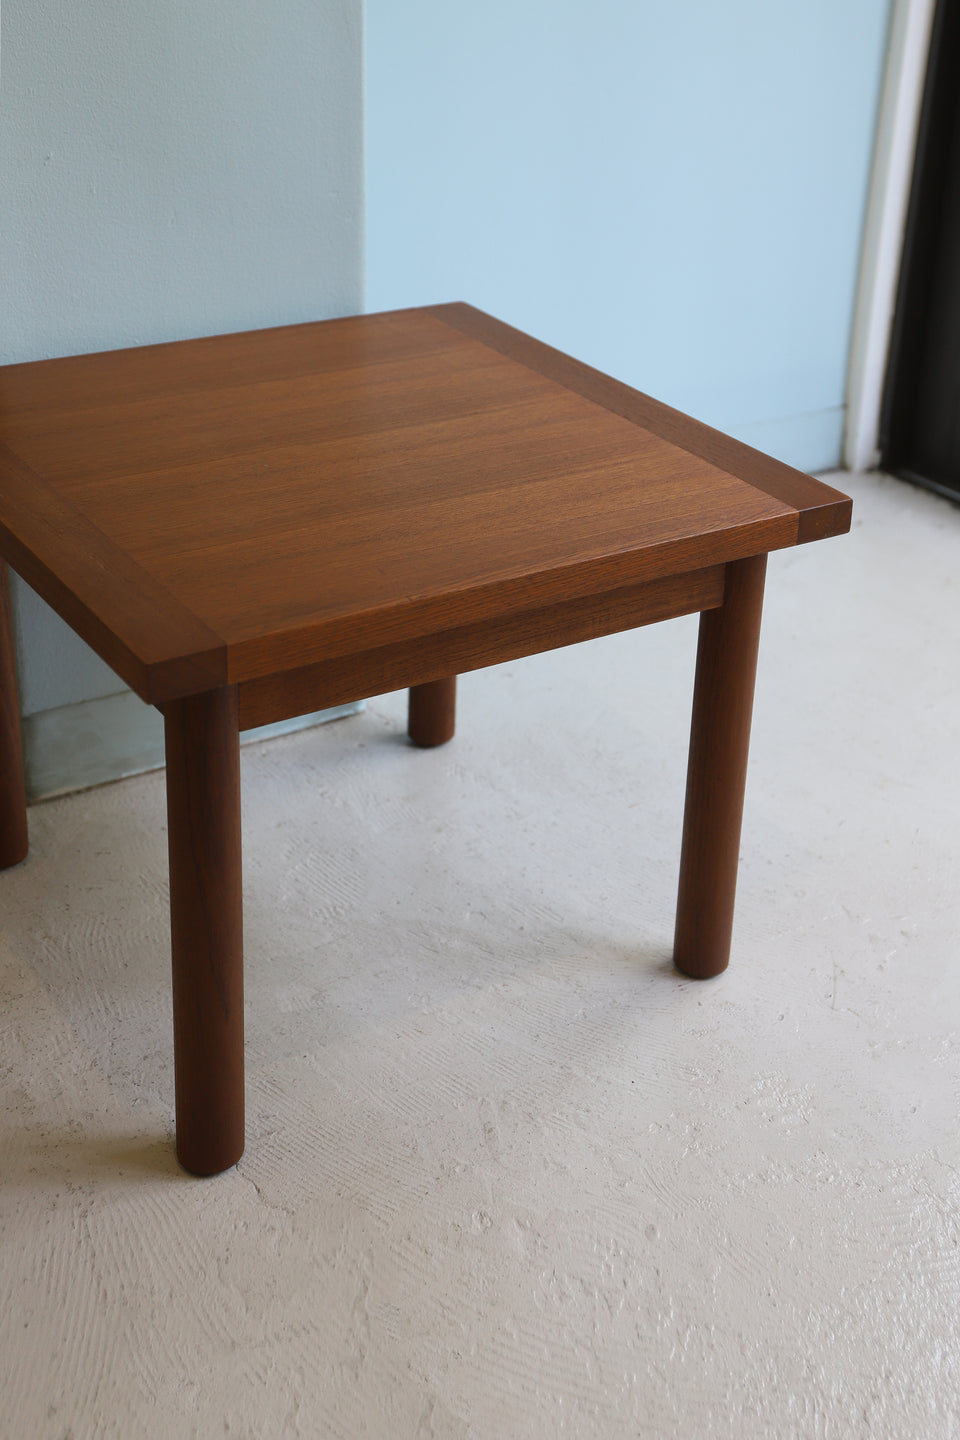 Vintage Square Side Table Teakwood/ヴィンテージ サイドテーブル チーク材 北欧デザイン